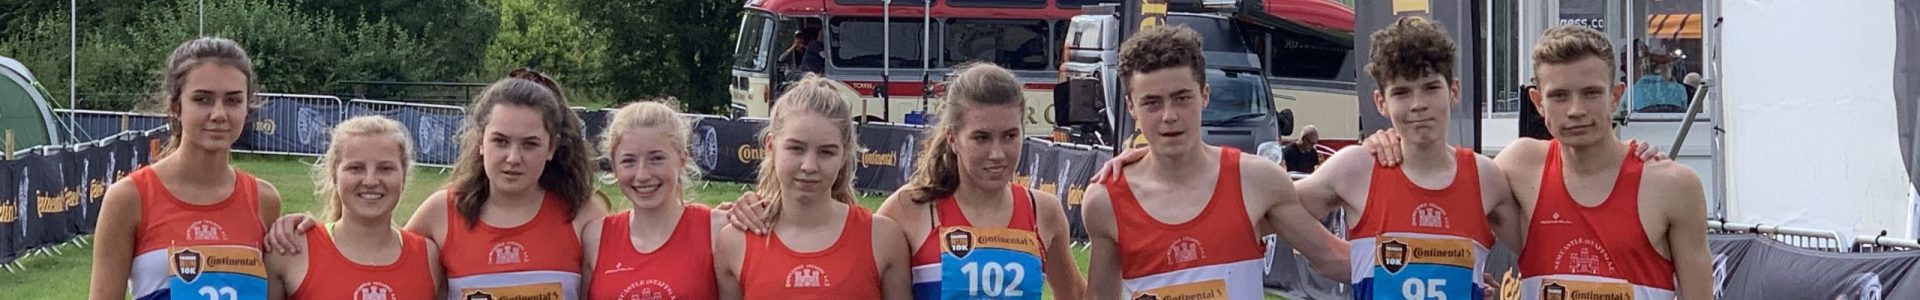 Nadine Tomkinson races at English Track Championships – 1/9/2019